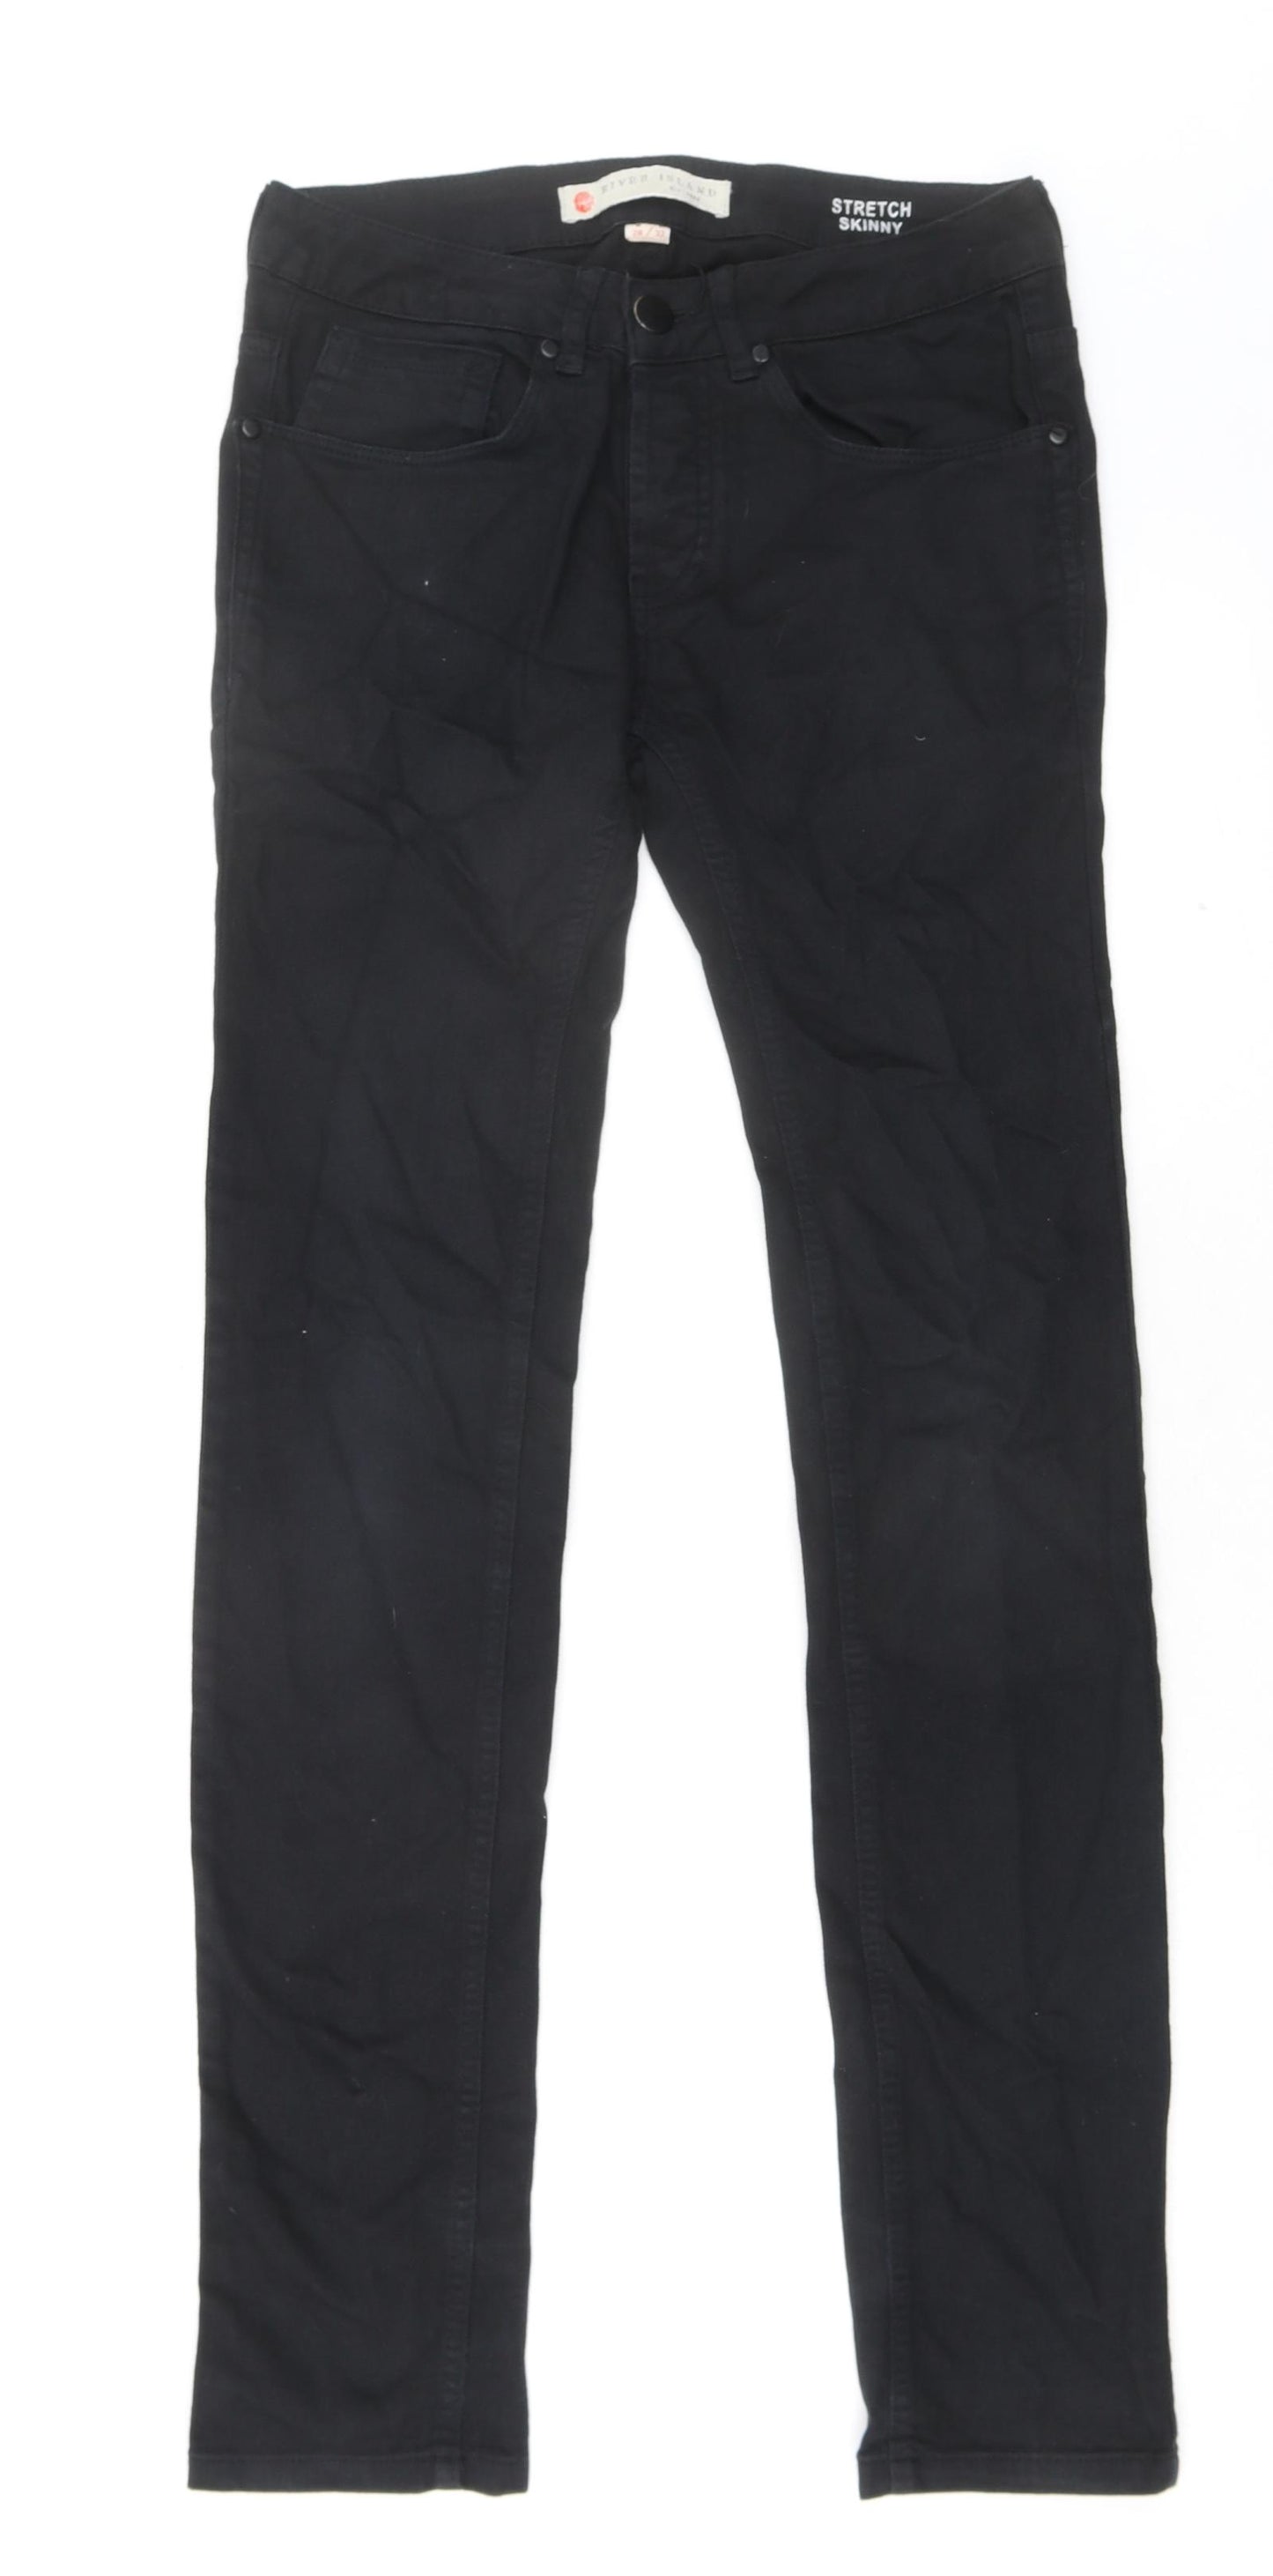 River Island Womens Black Cotton Skinny Jeans Size 28 in L33 in Slim Zip